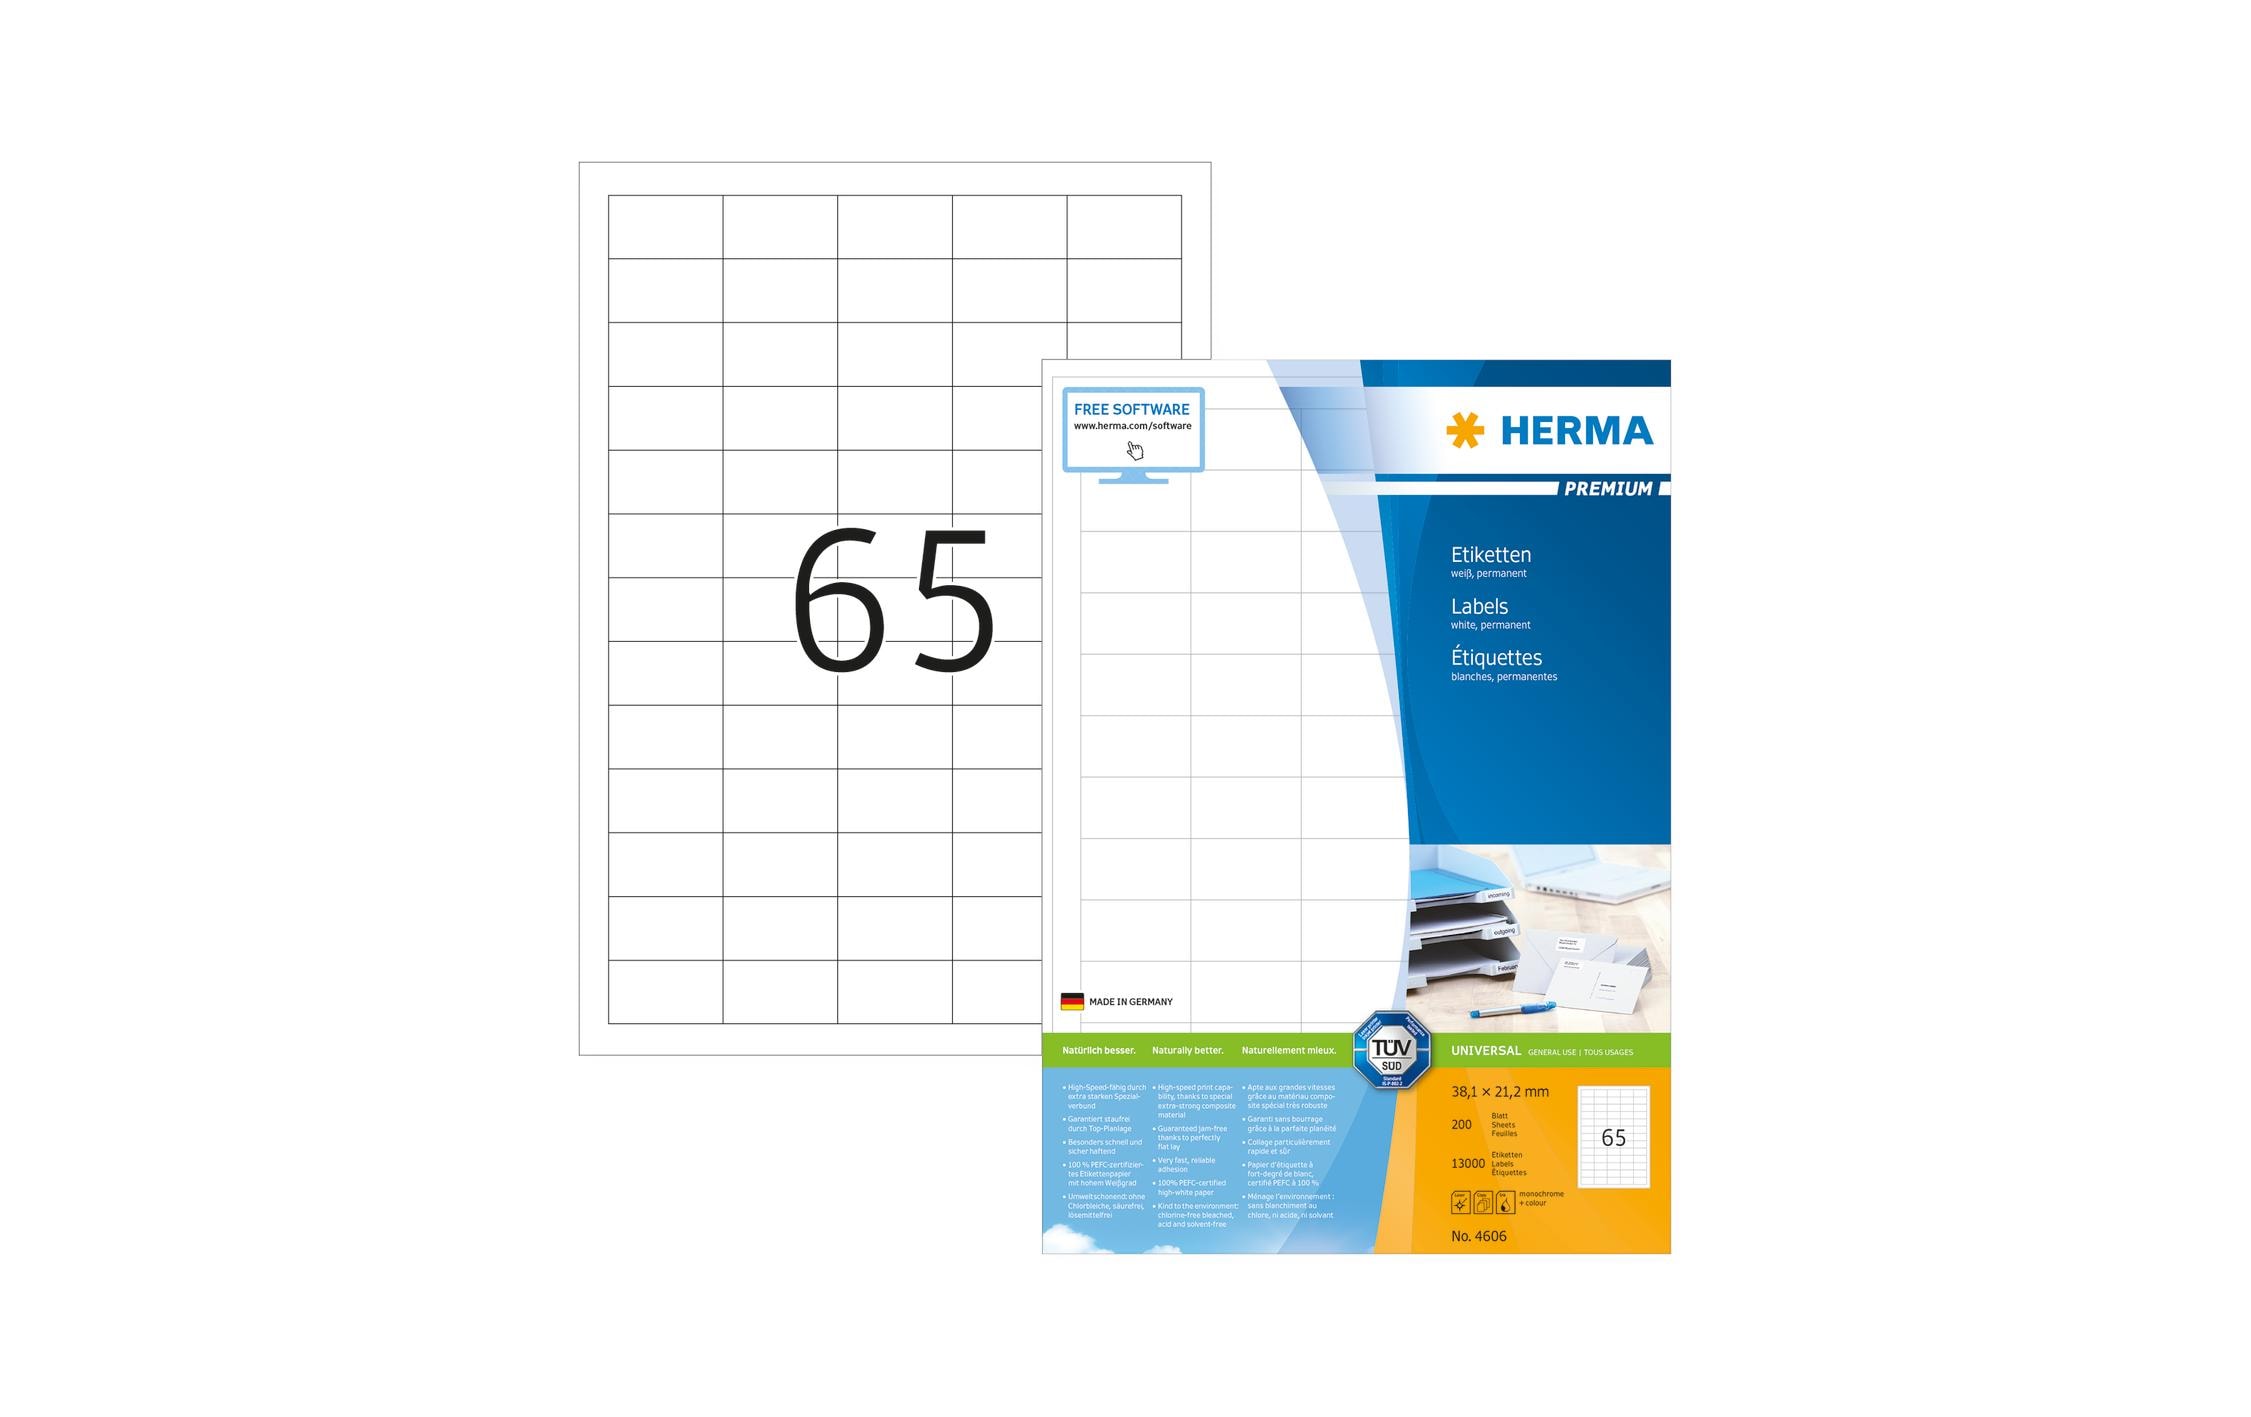 HERMA Universal-Etiketten Premium, 3.8 x 2.12 cm, 13000 Etiketten